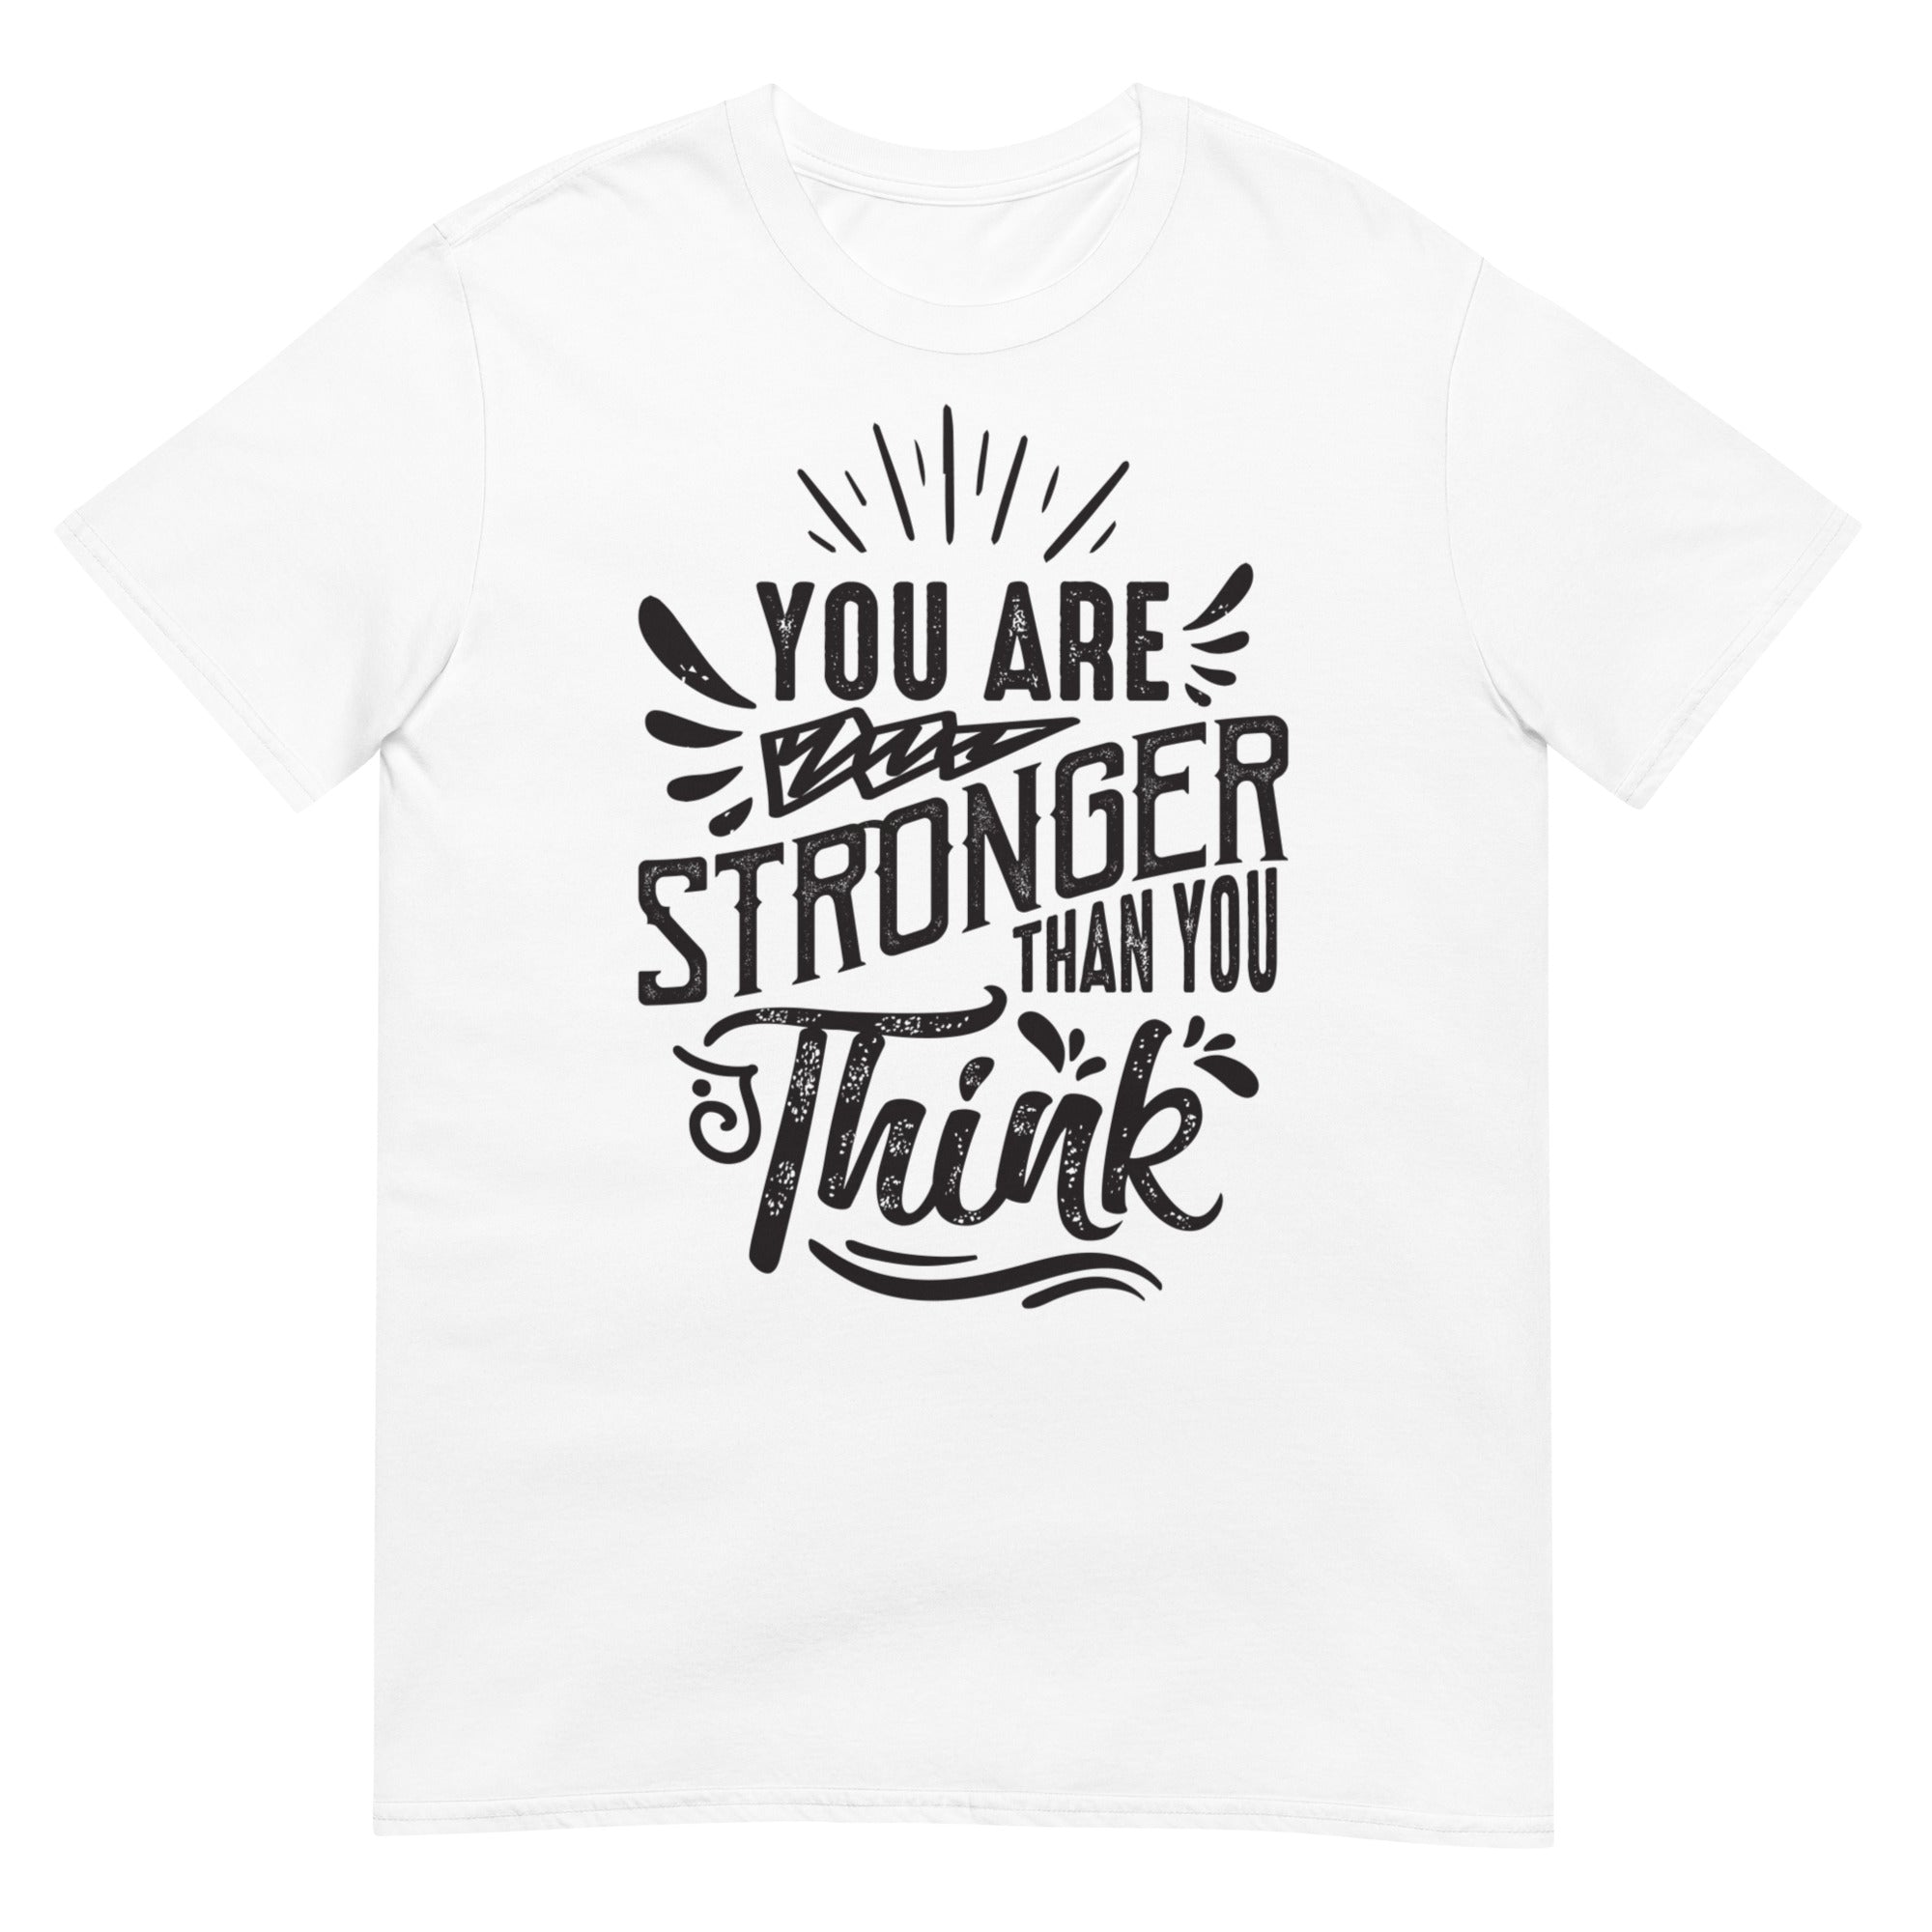 You Are Stronger - Short-Sleeve Unisex T-Shirt